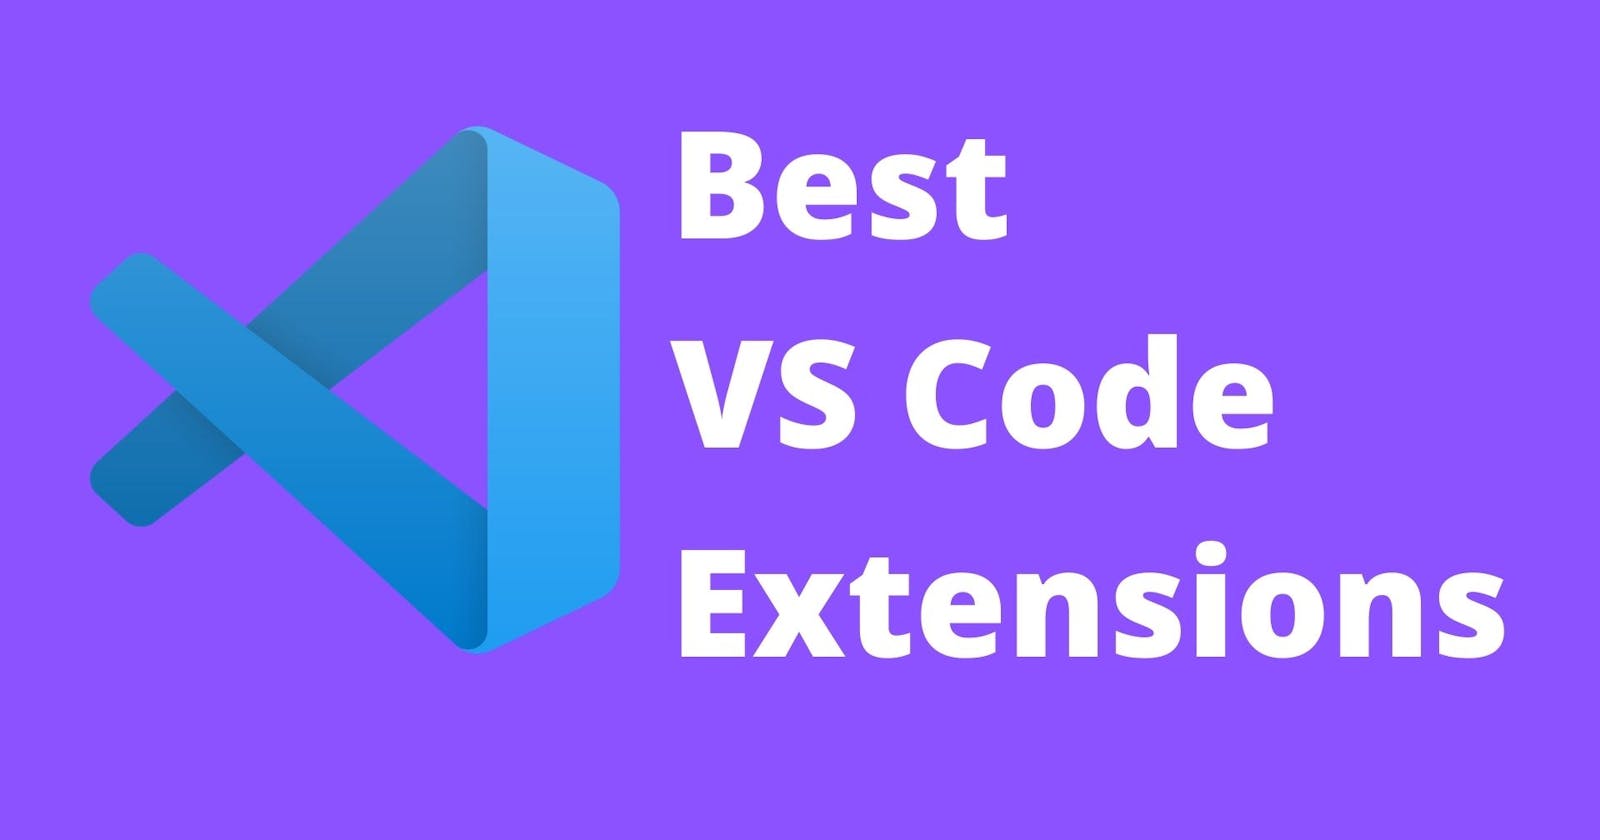 Best VS code Extensions for web development.